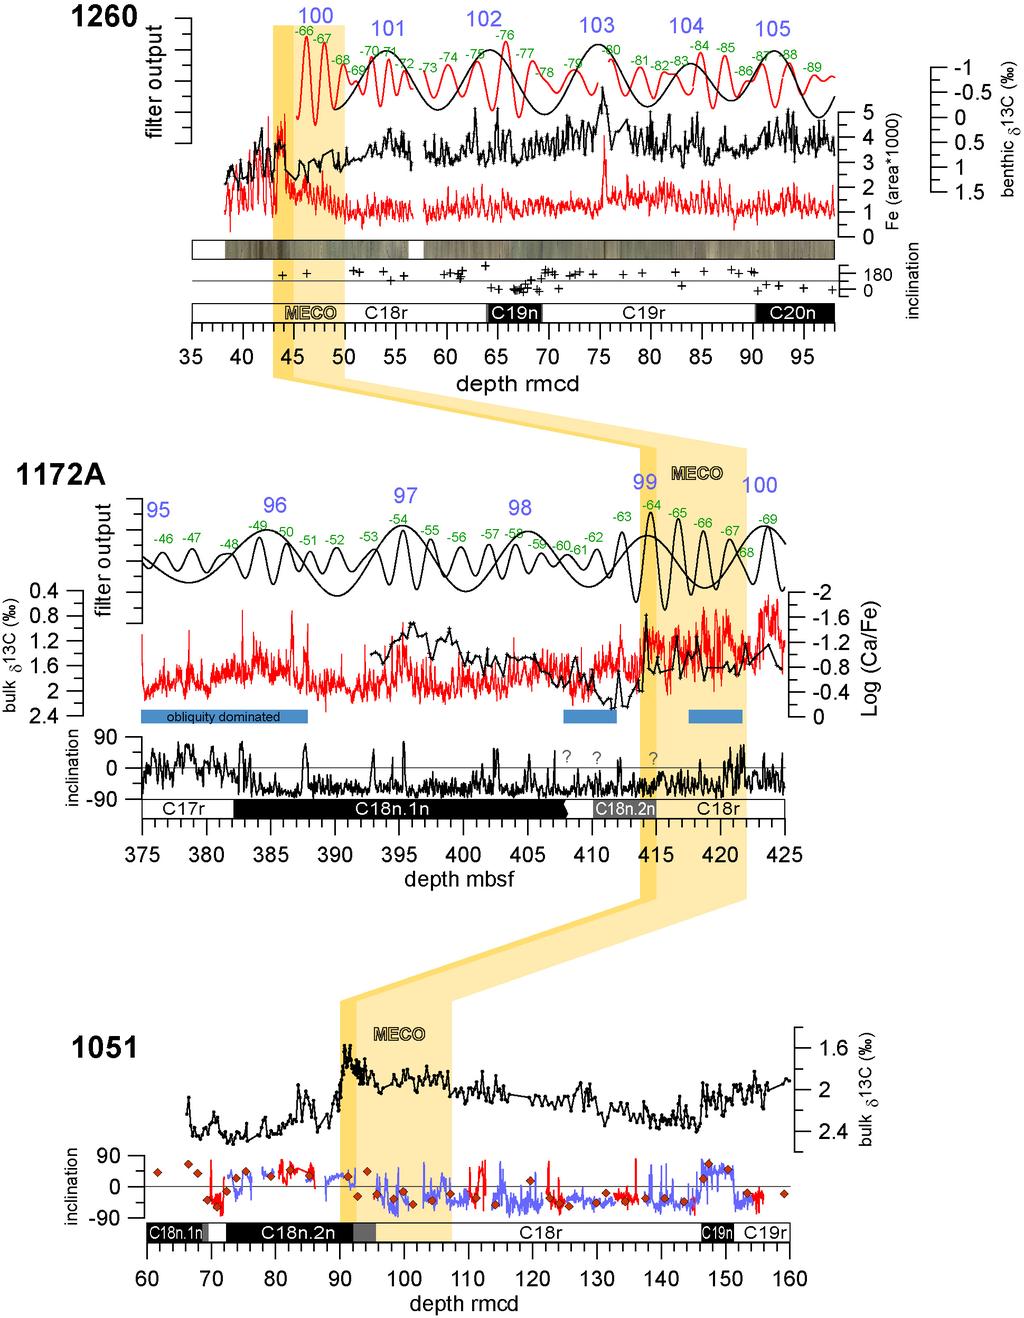 Figure 6. Correlation of the Middle Eocene Climate Optimum (MECO) between ODP Sites 1260 (Demerara Rise), 1172A (East Tasman Plateau) and 1051 (Blake Nose).